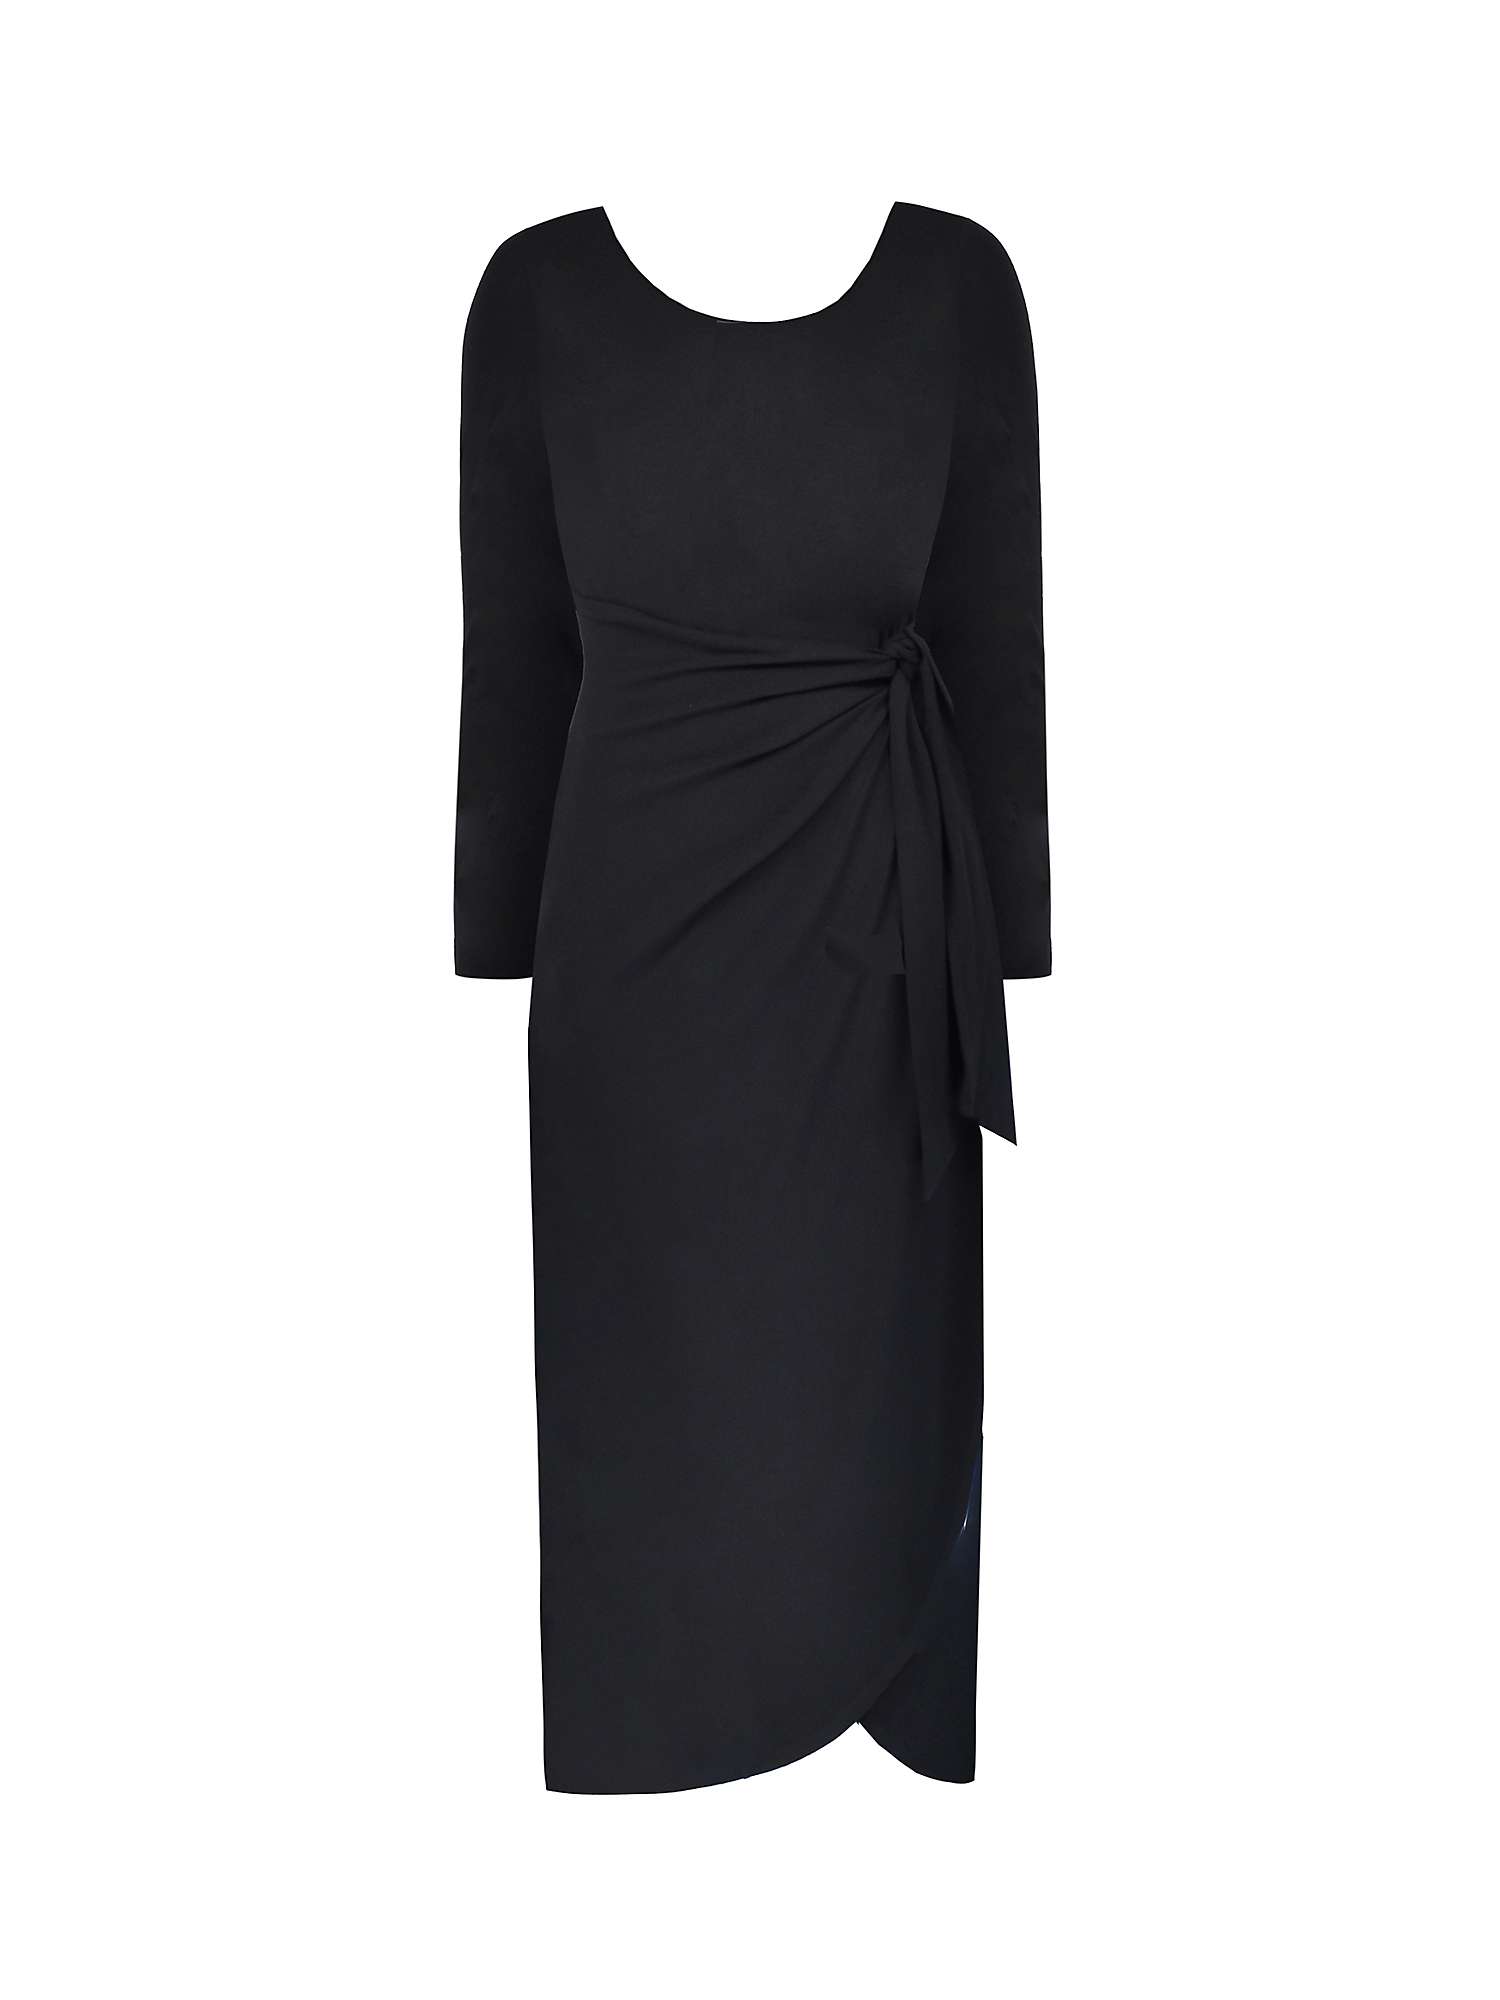 Ro&Zo Scoop Neck Wrap Jersey Dress, Black at John Lewis & Partners